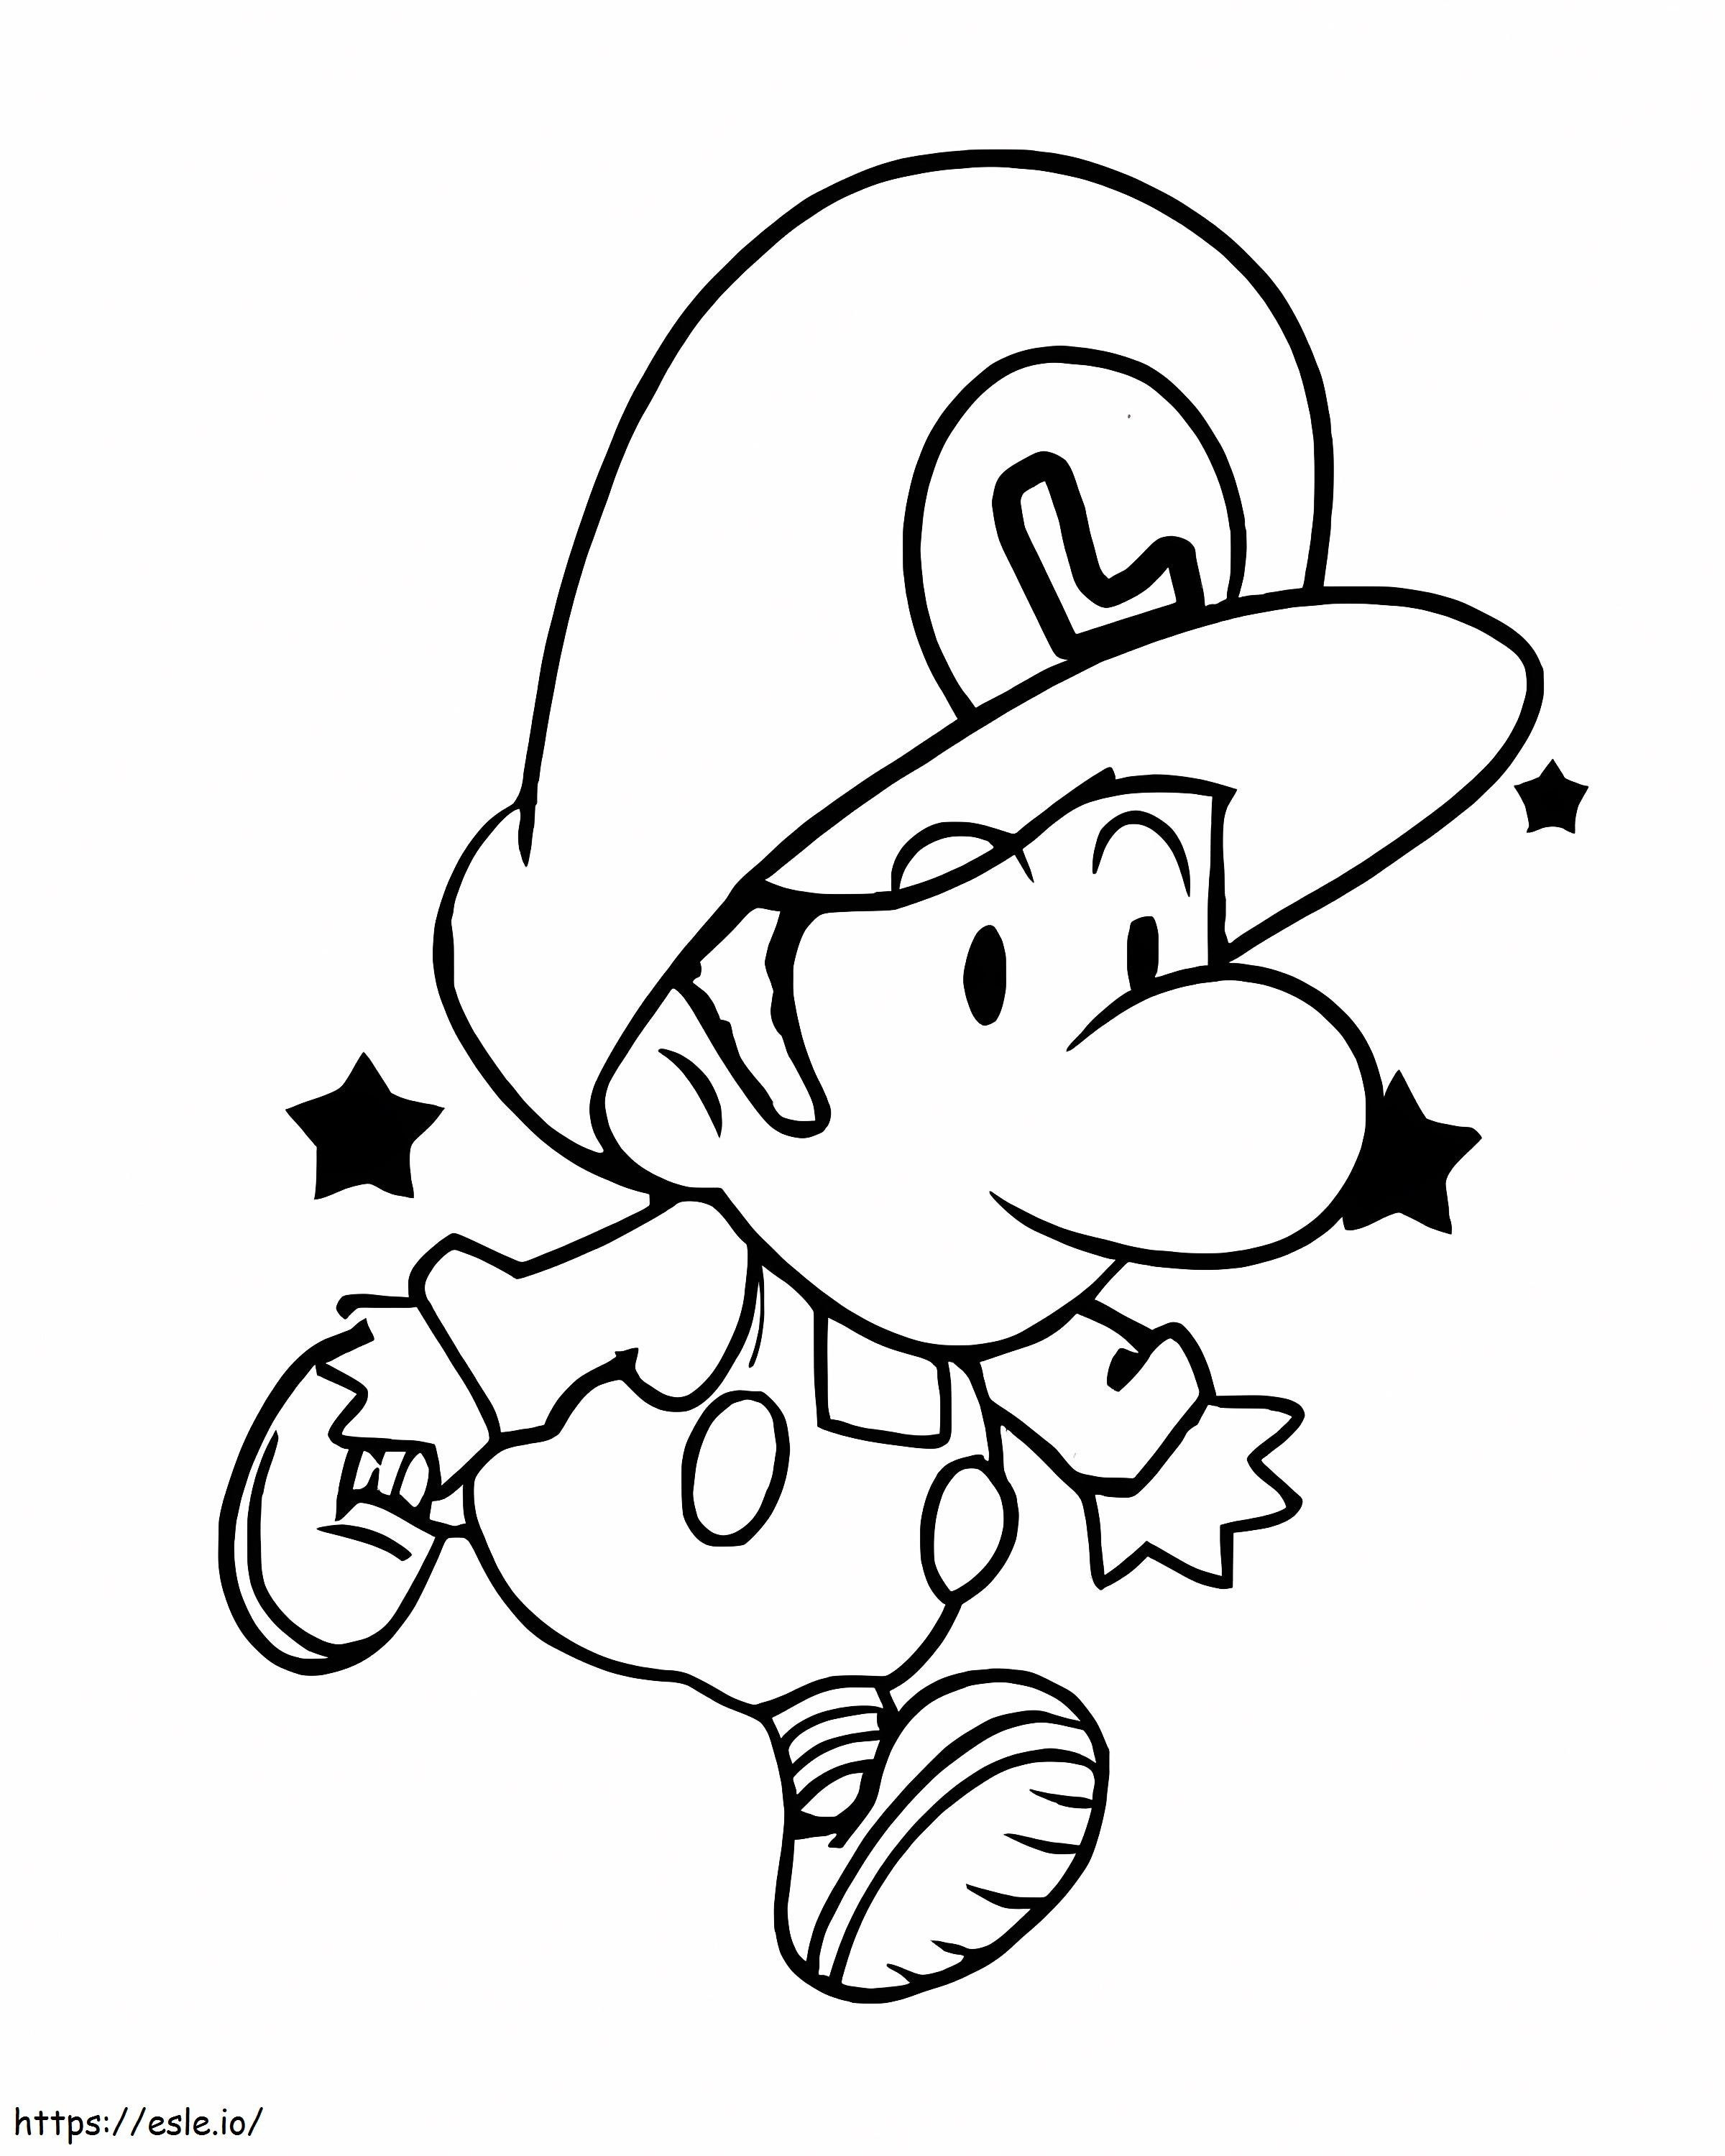 Baby Luigi Running coloring page